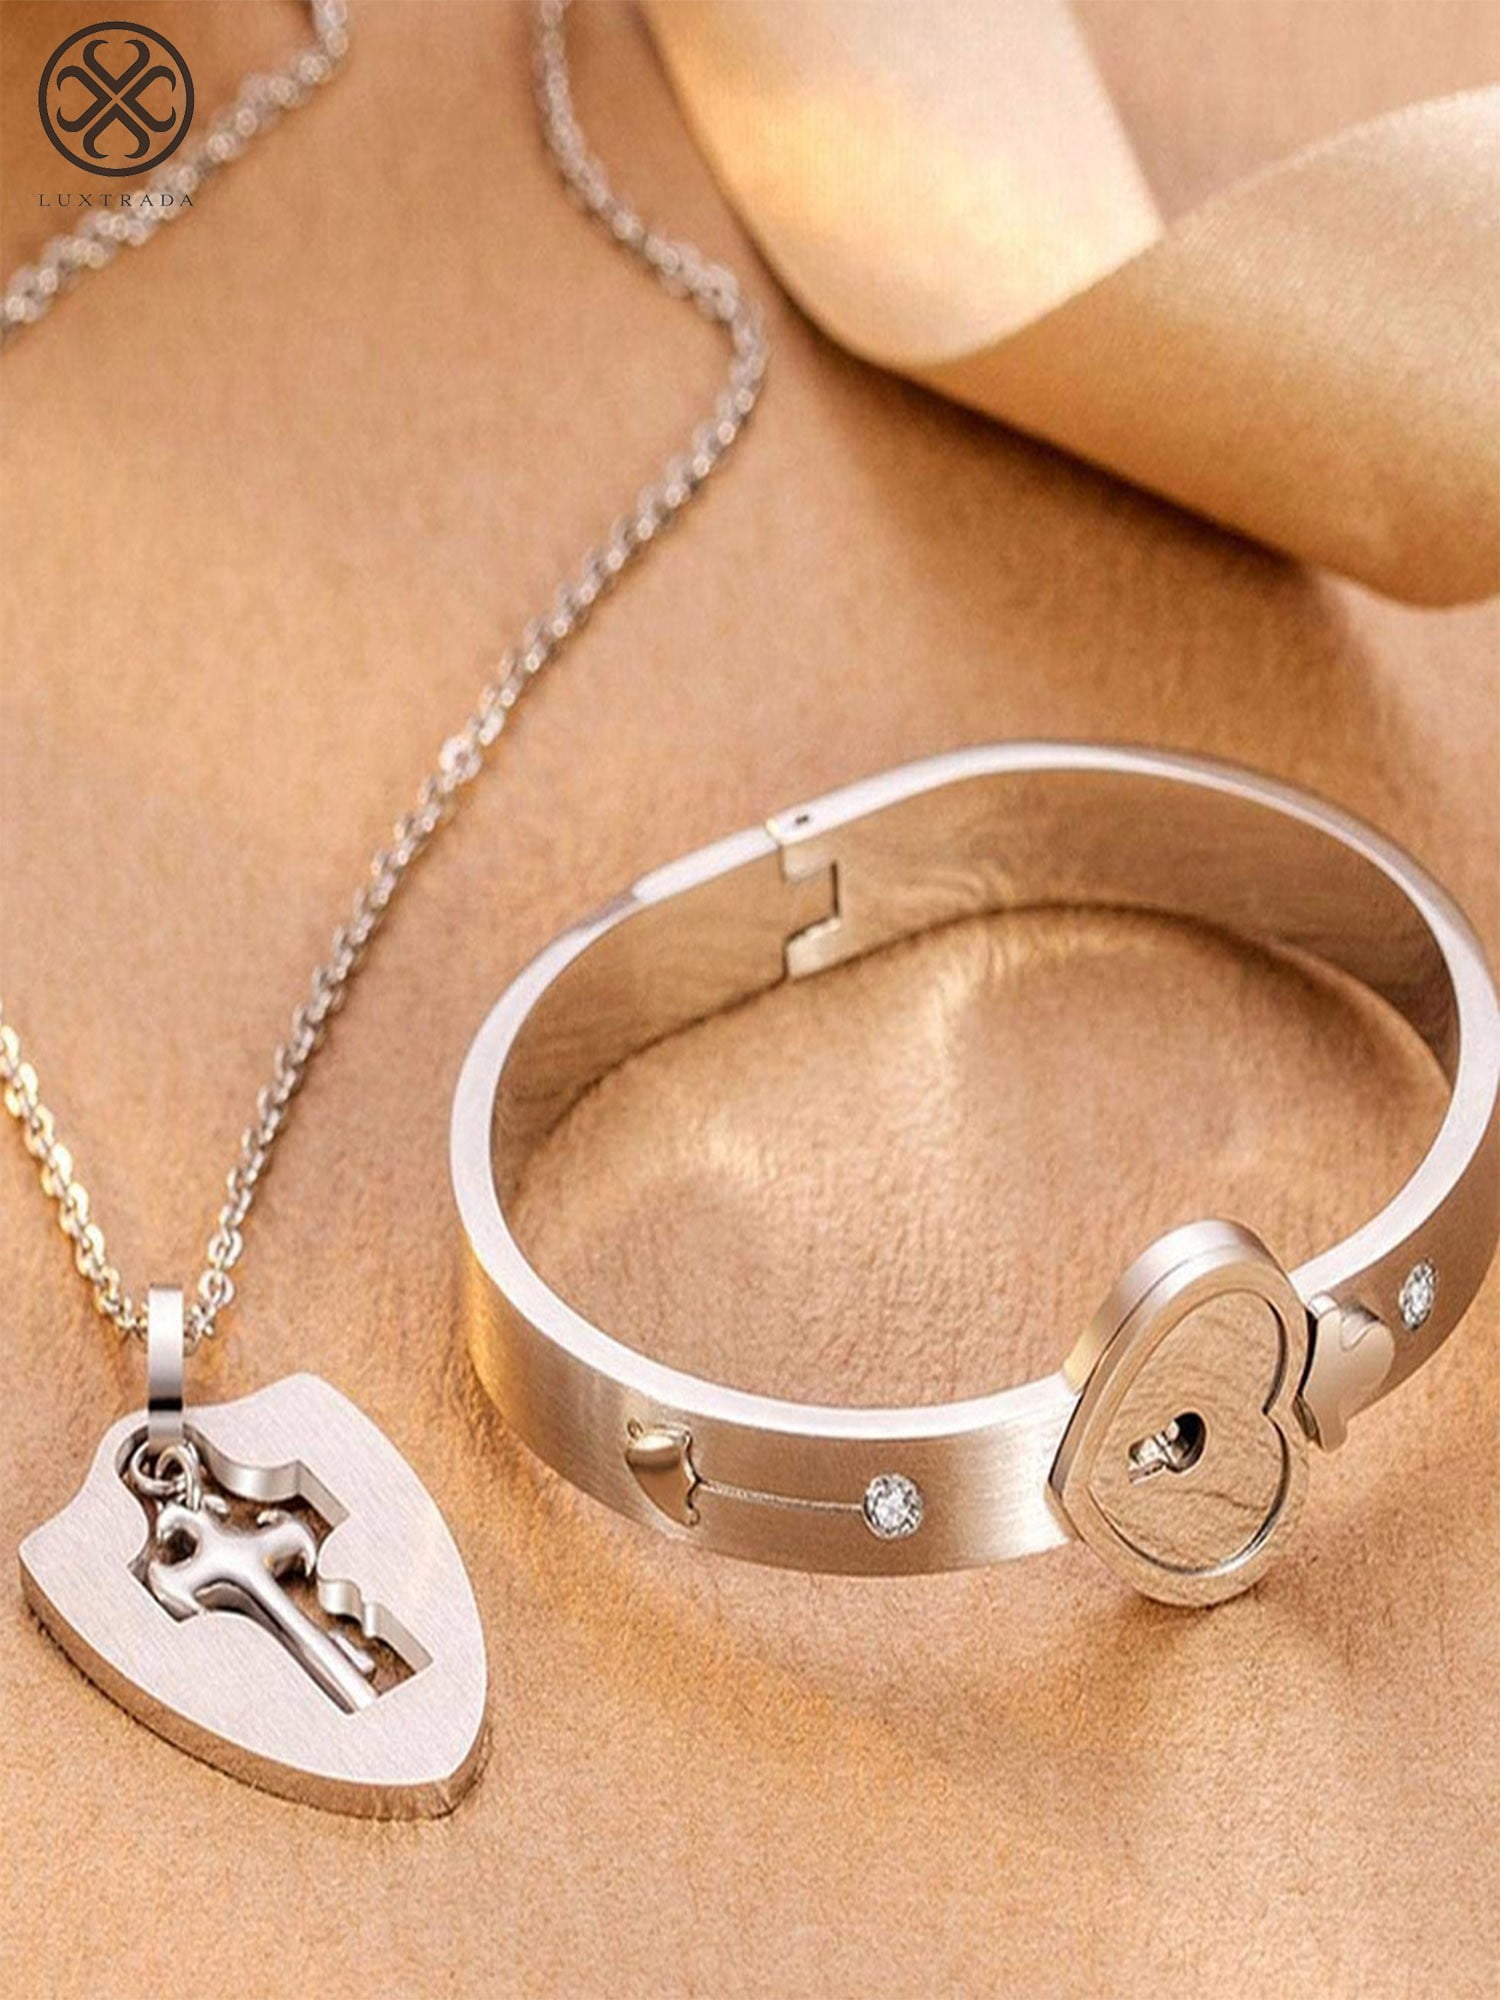 Luxtrada Heart Love Lock Bracelet with 